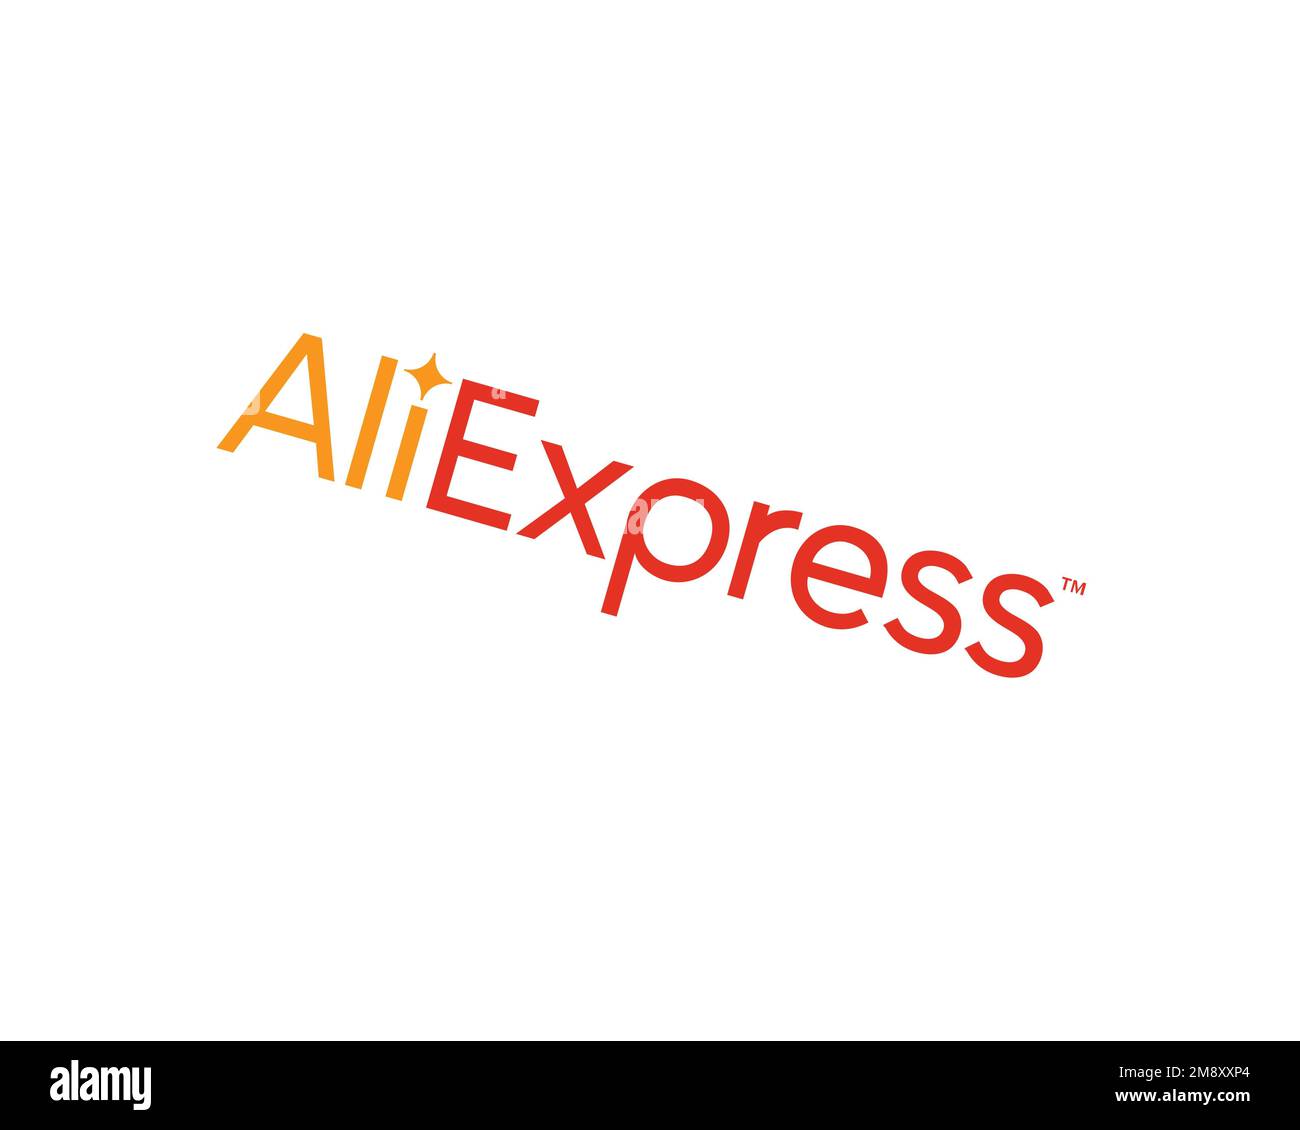 AliExpress, rotated logo, white background B Stock Photo